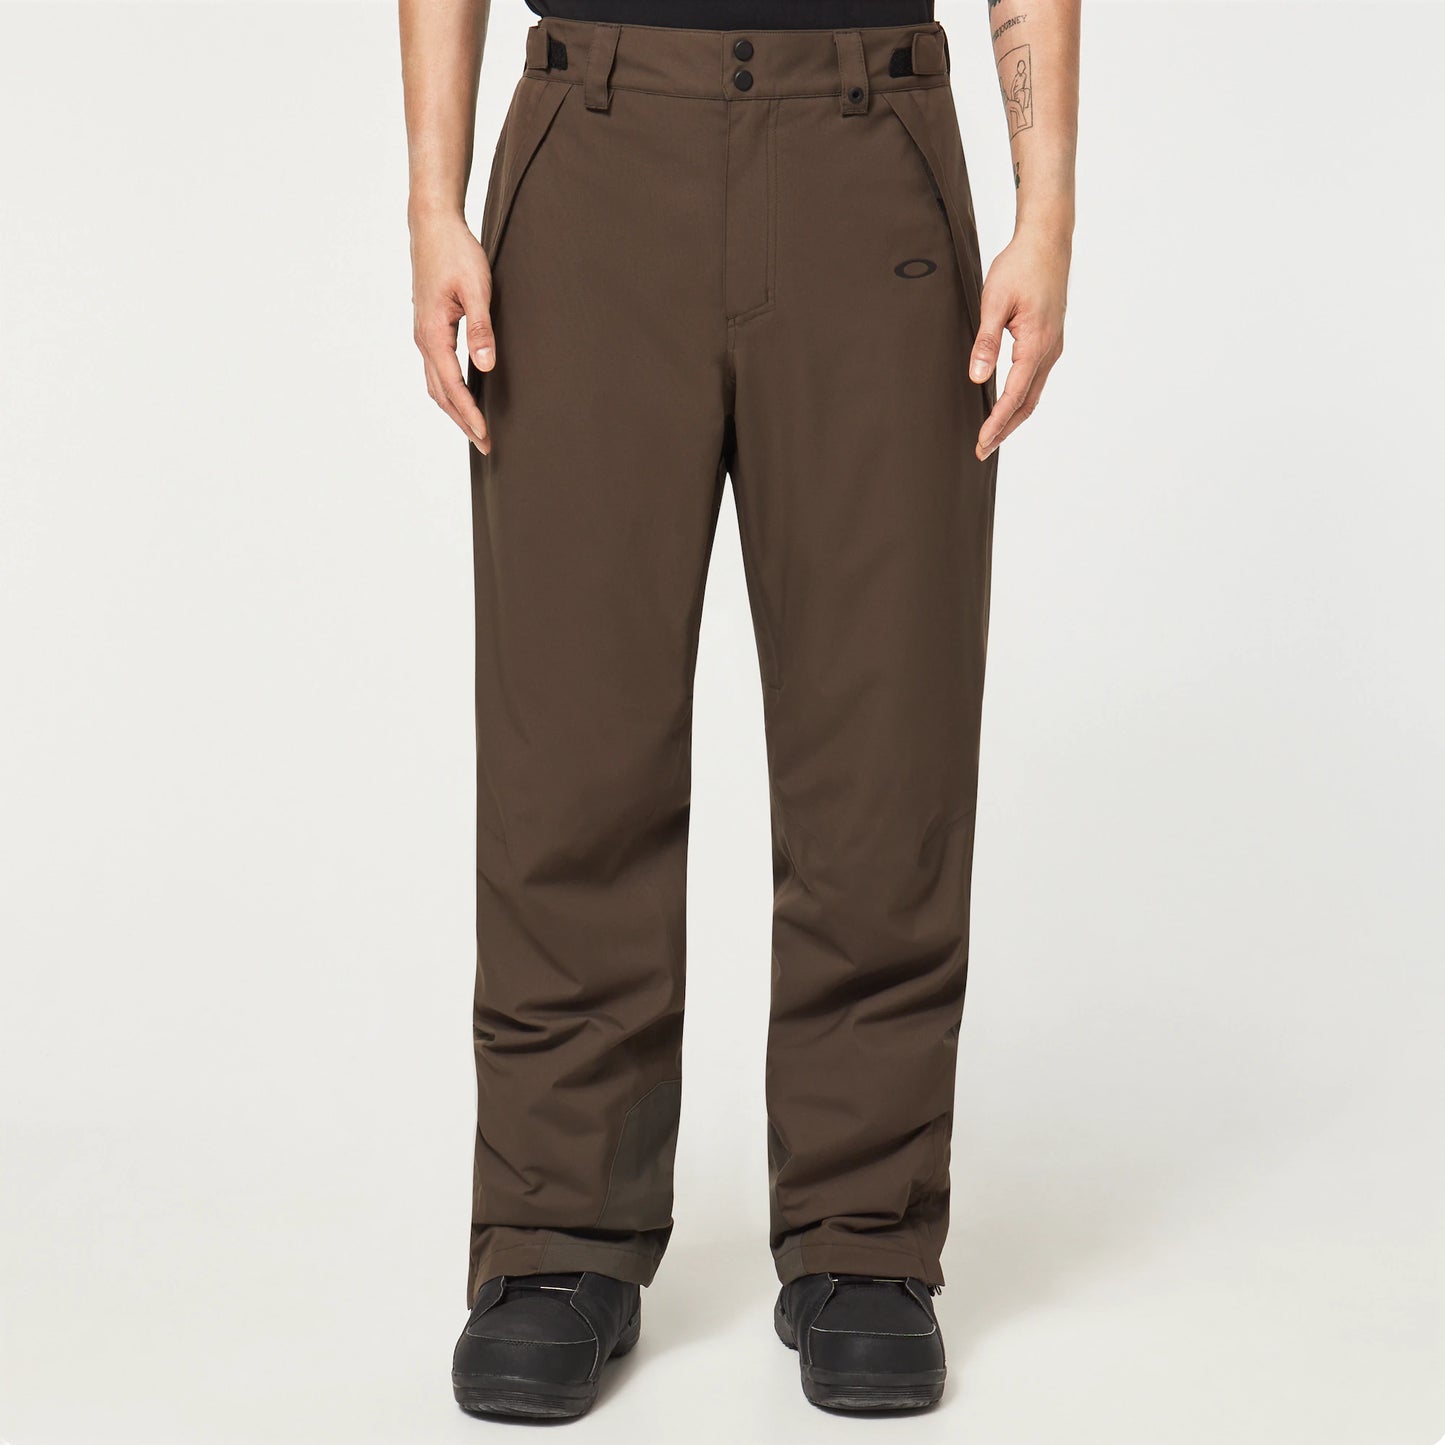 Oakley Best Cedar RC Insulated Pants - Men's